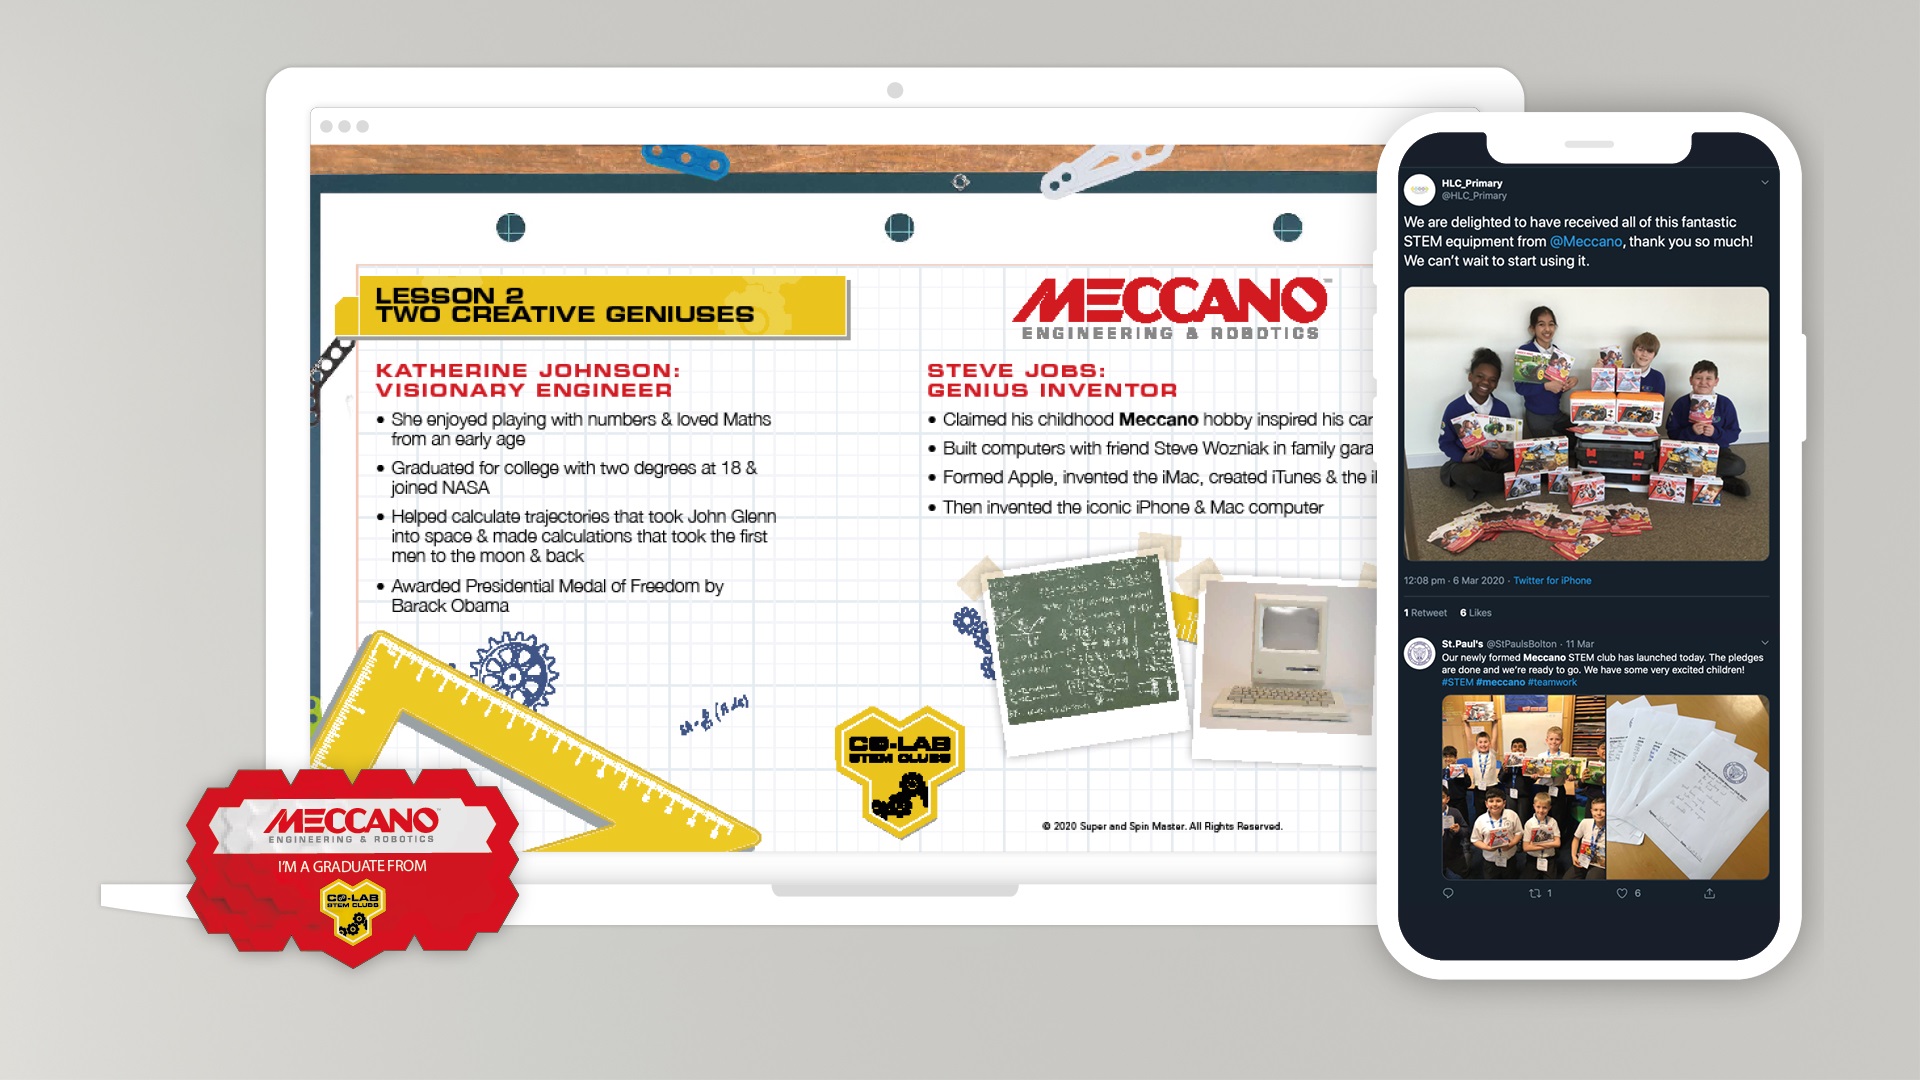 Meccano STEM Marketing to children in schools with SUPER